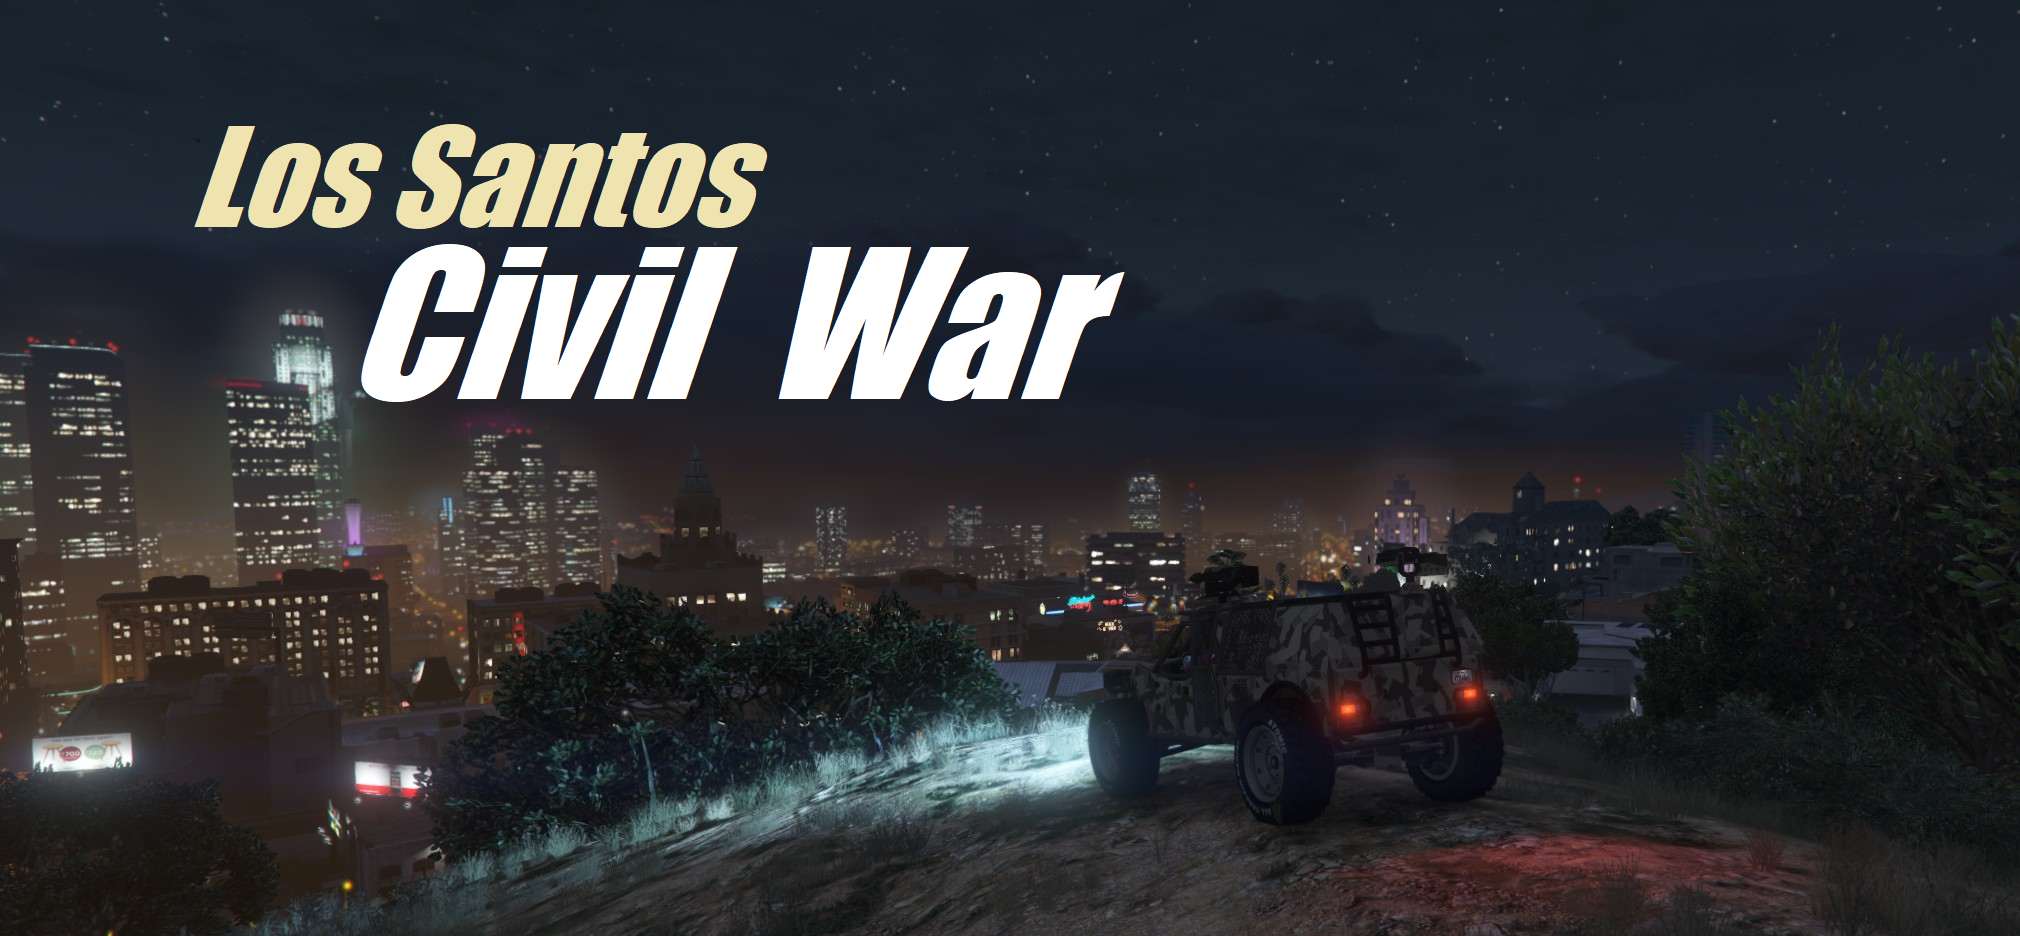 Military Truck Overlooking Los Santos: Civil War